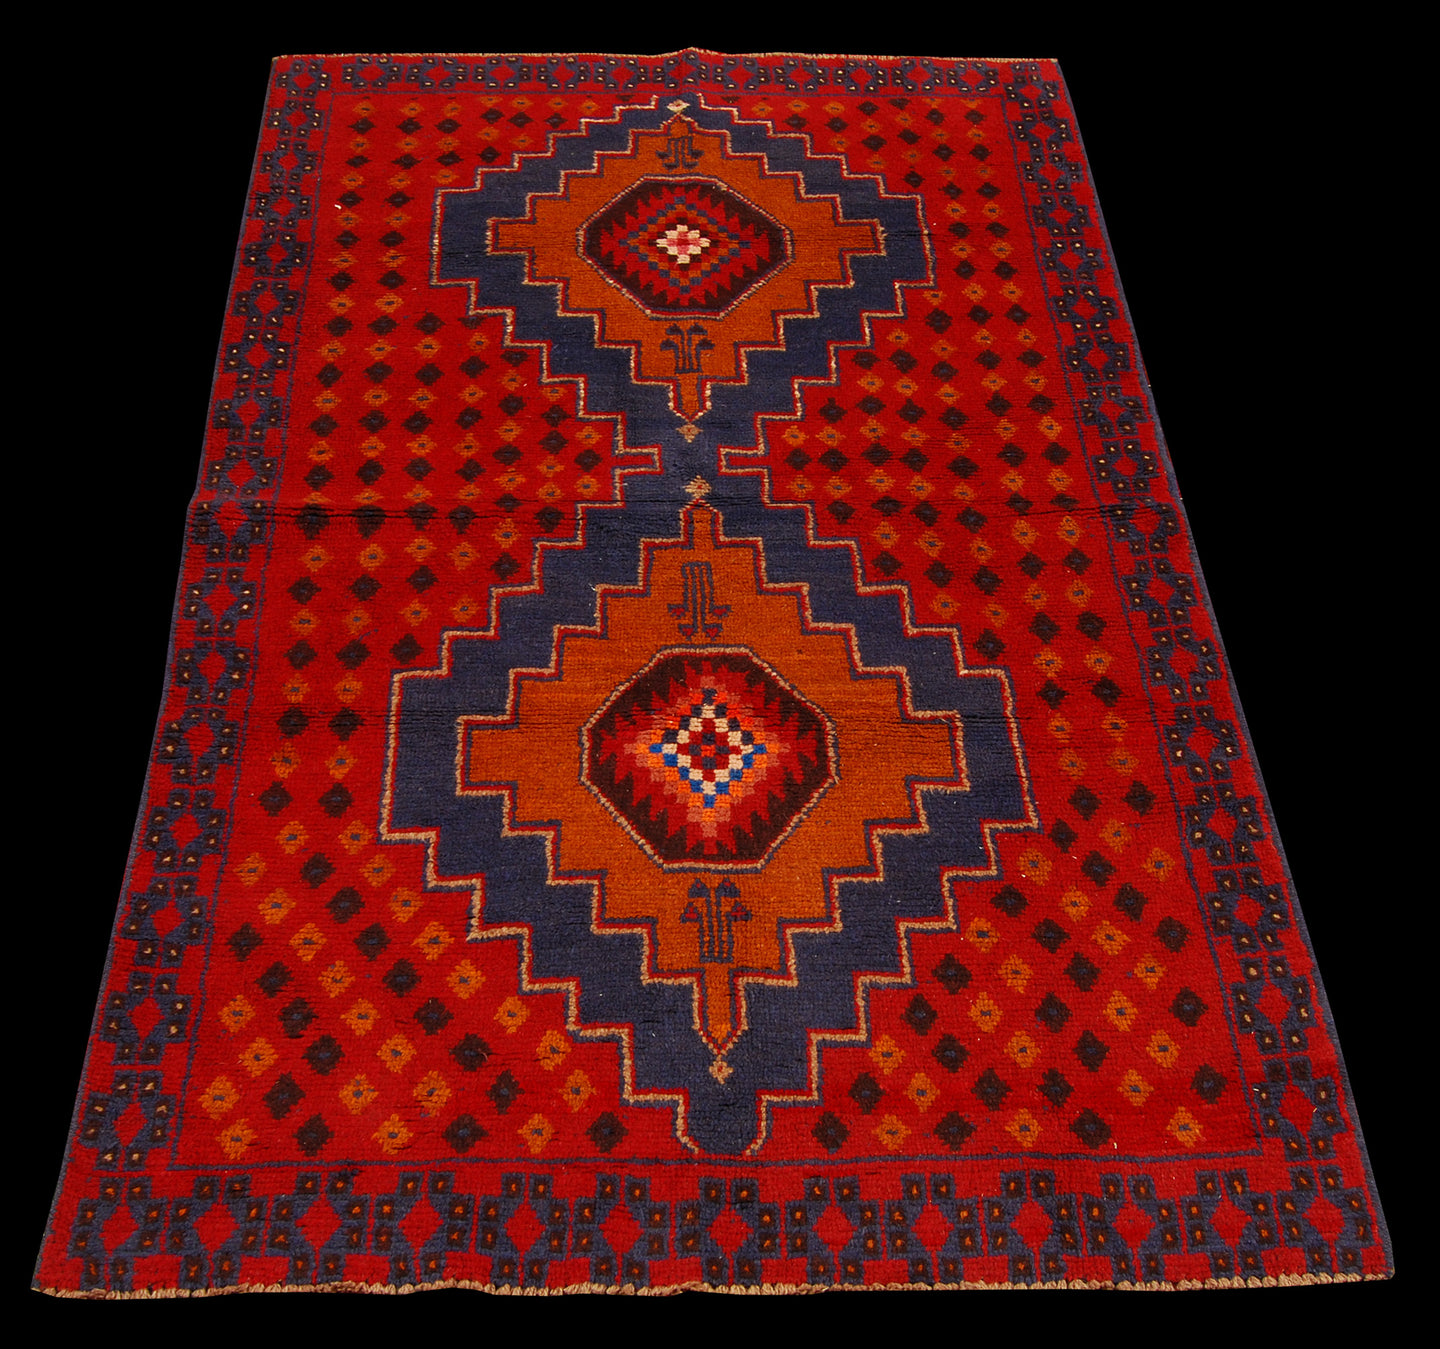 Genuine, Original Pure Wool Rug Rustic Handmad Carpet CM 186x114